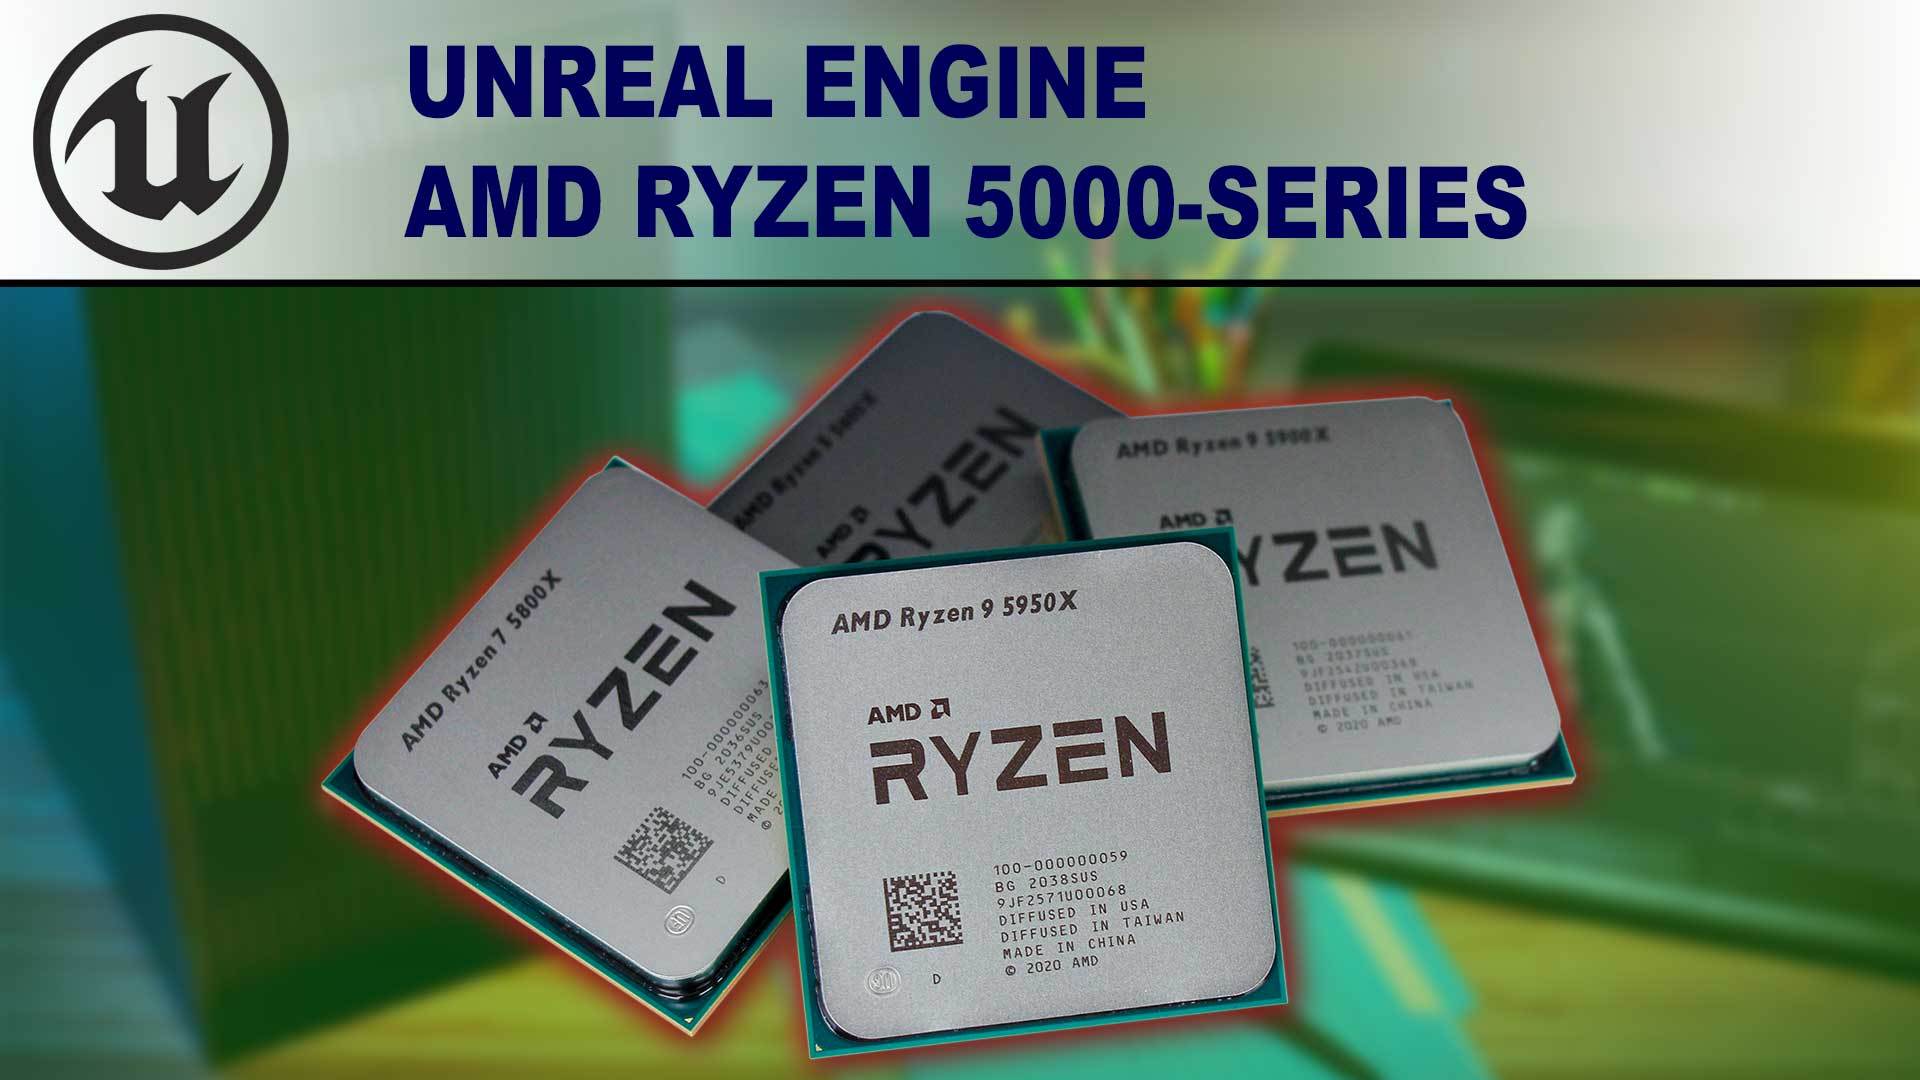 AMD Ryzen 5000-series for Unreal Engine